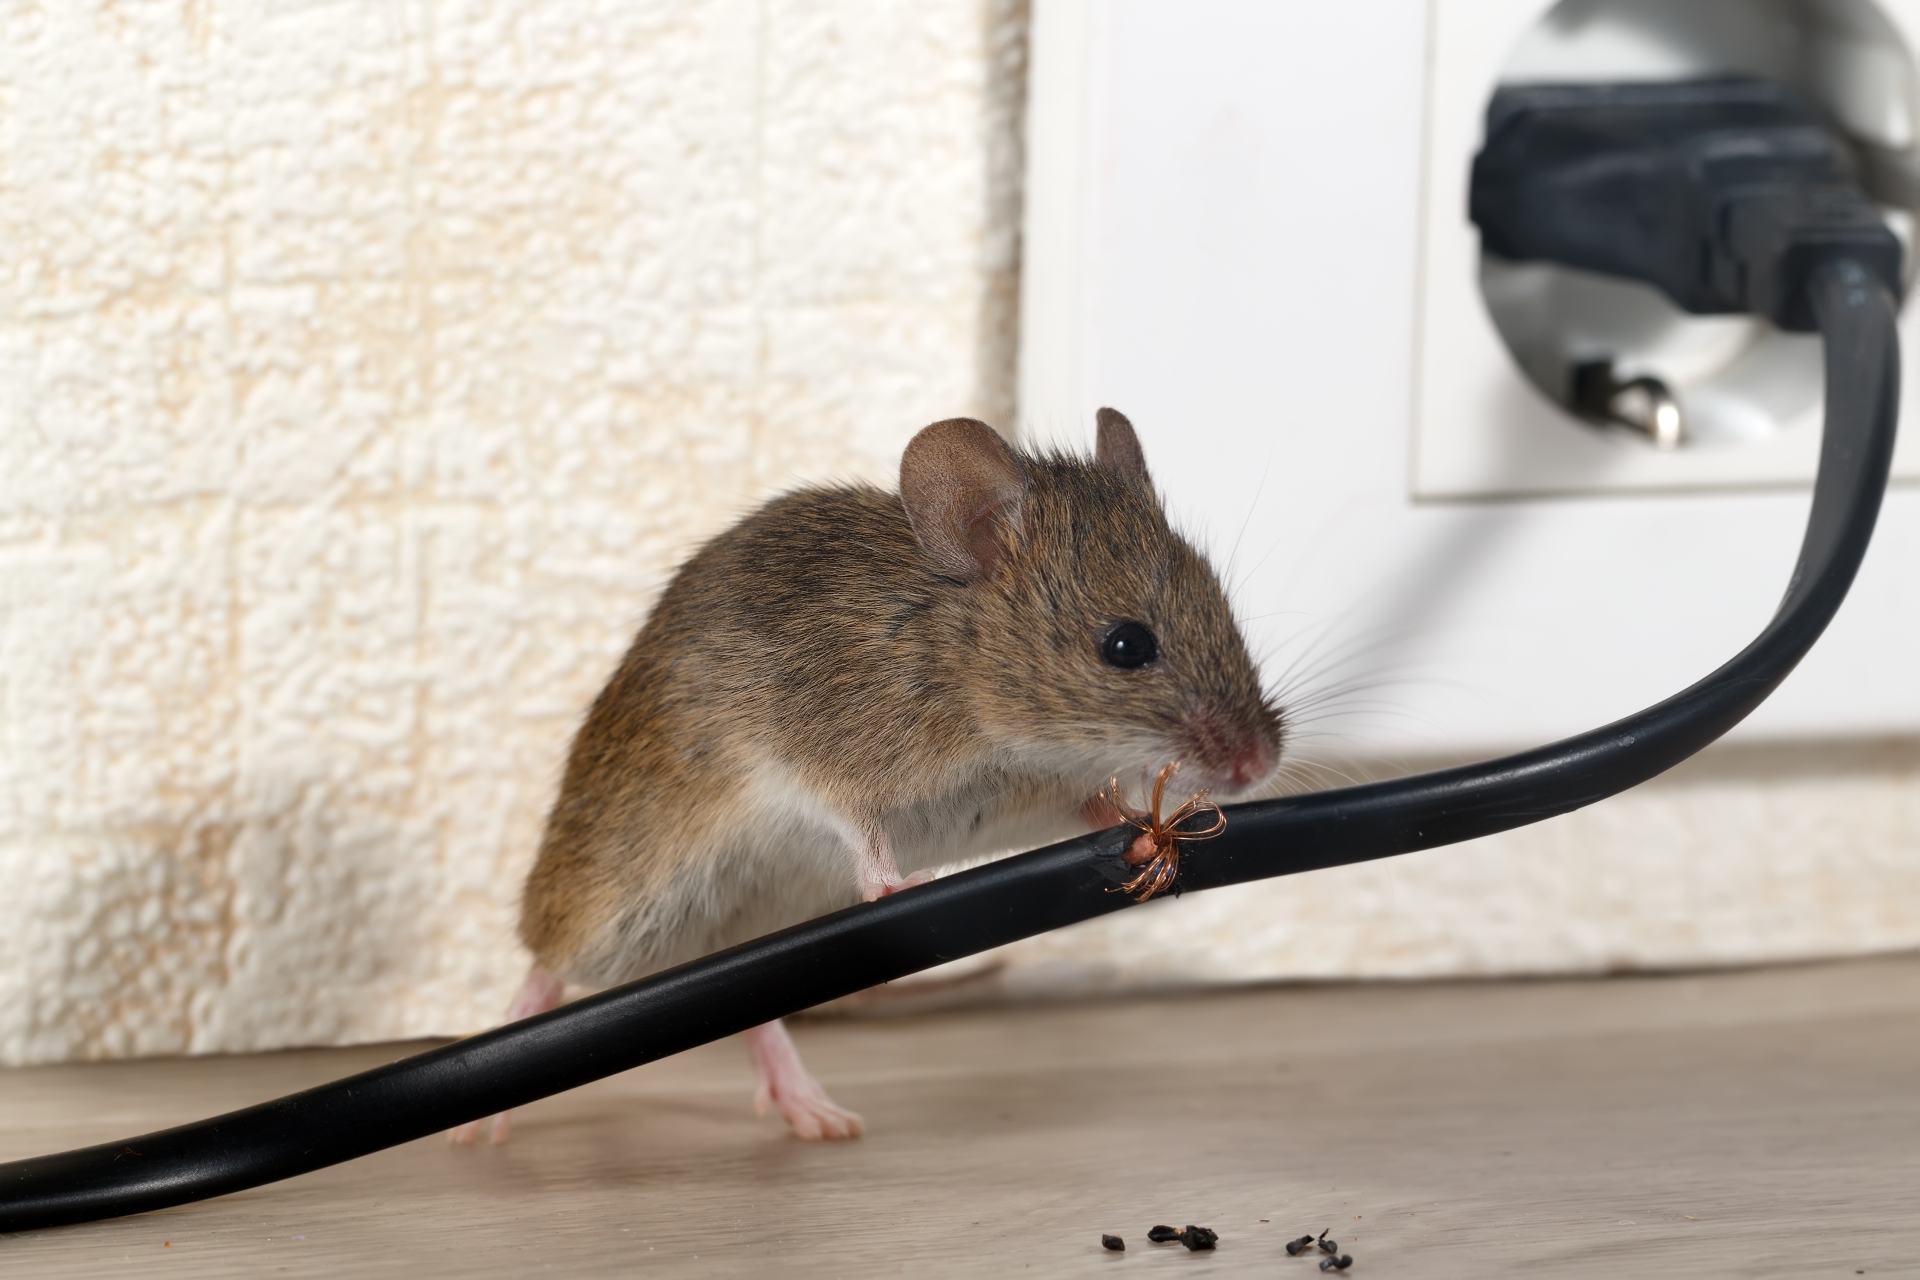 Mice Infestation, Pest Control in Blackheath, SE3. Call Now 020 8166 9746